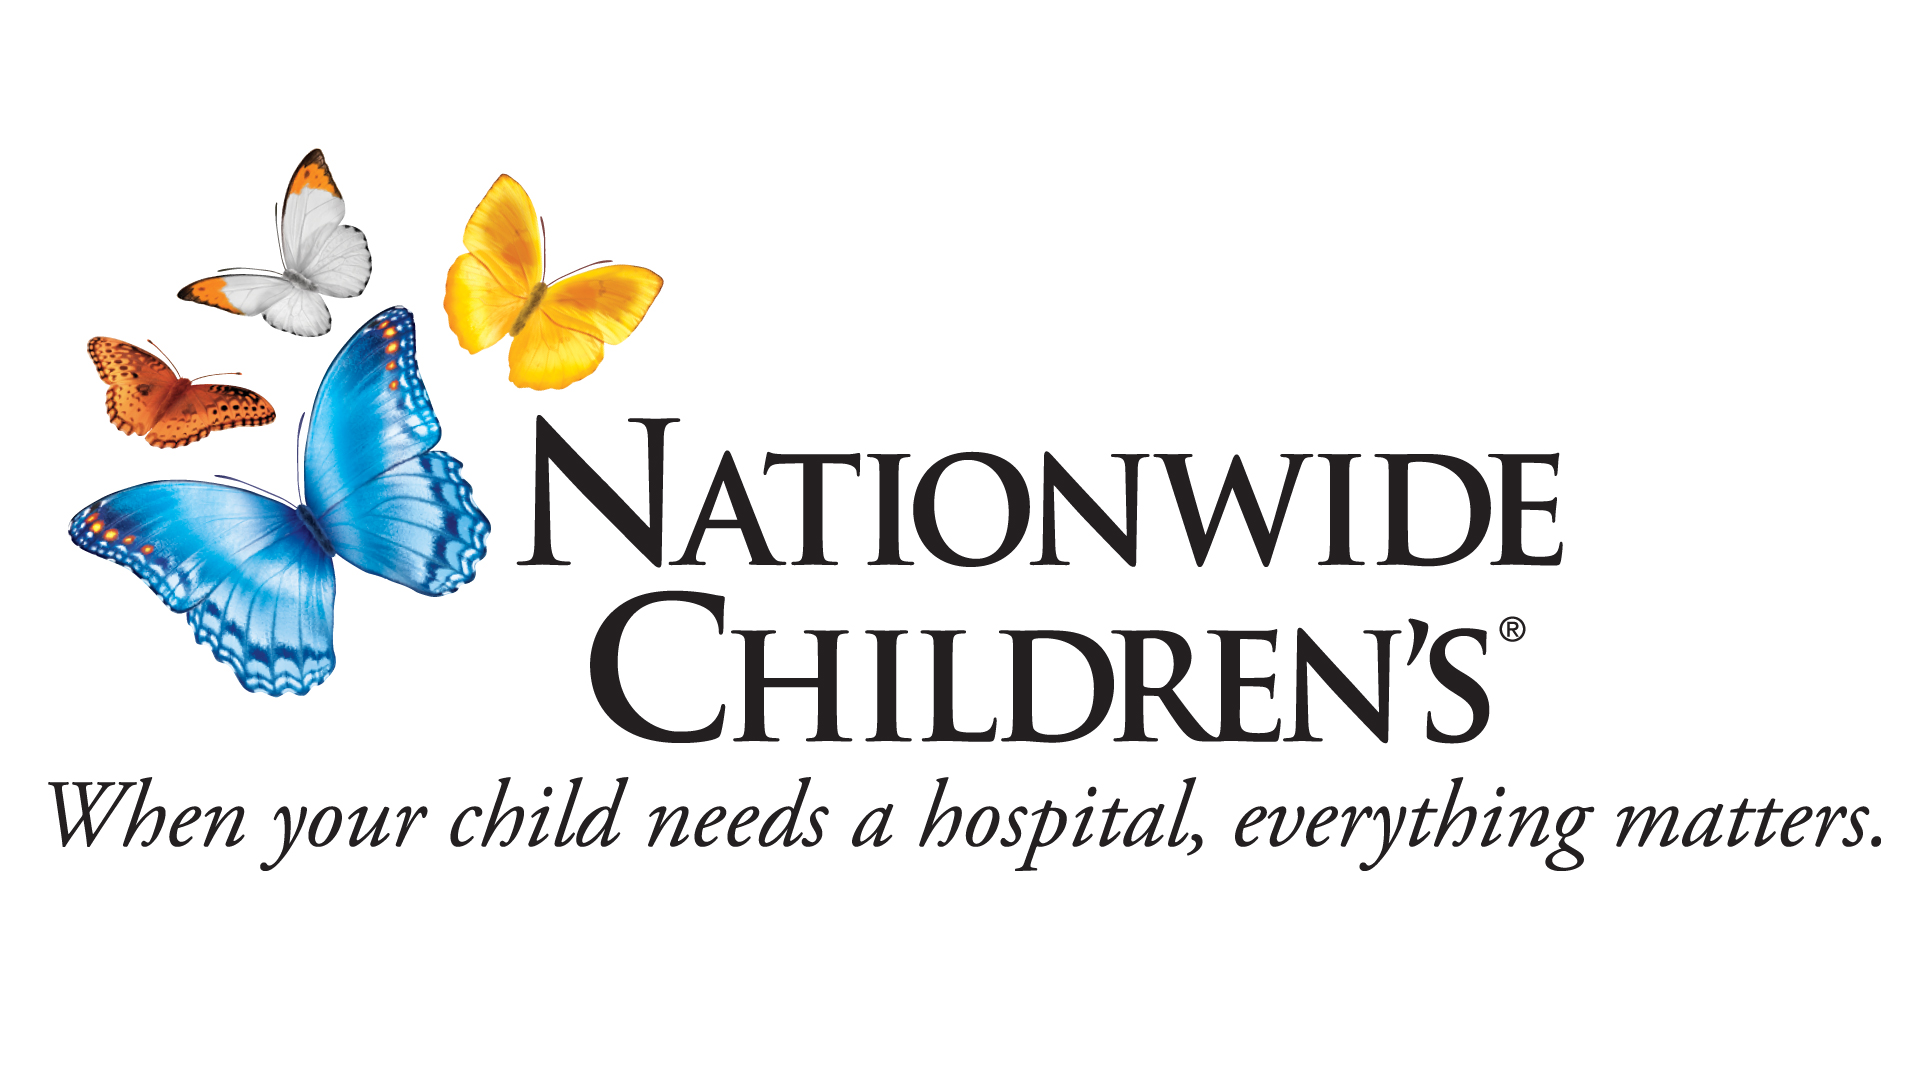 [Nationwide Children's Hospital]